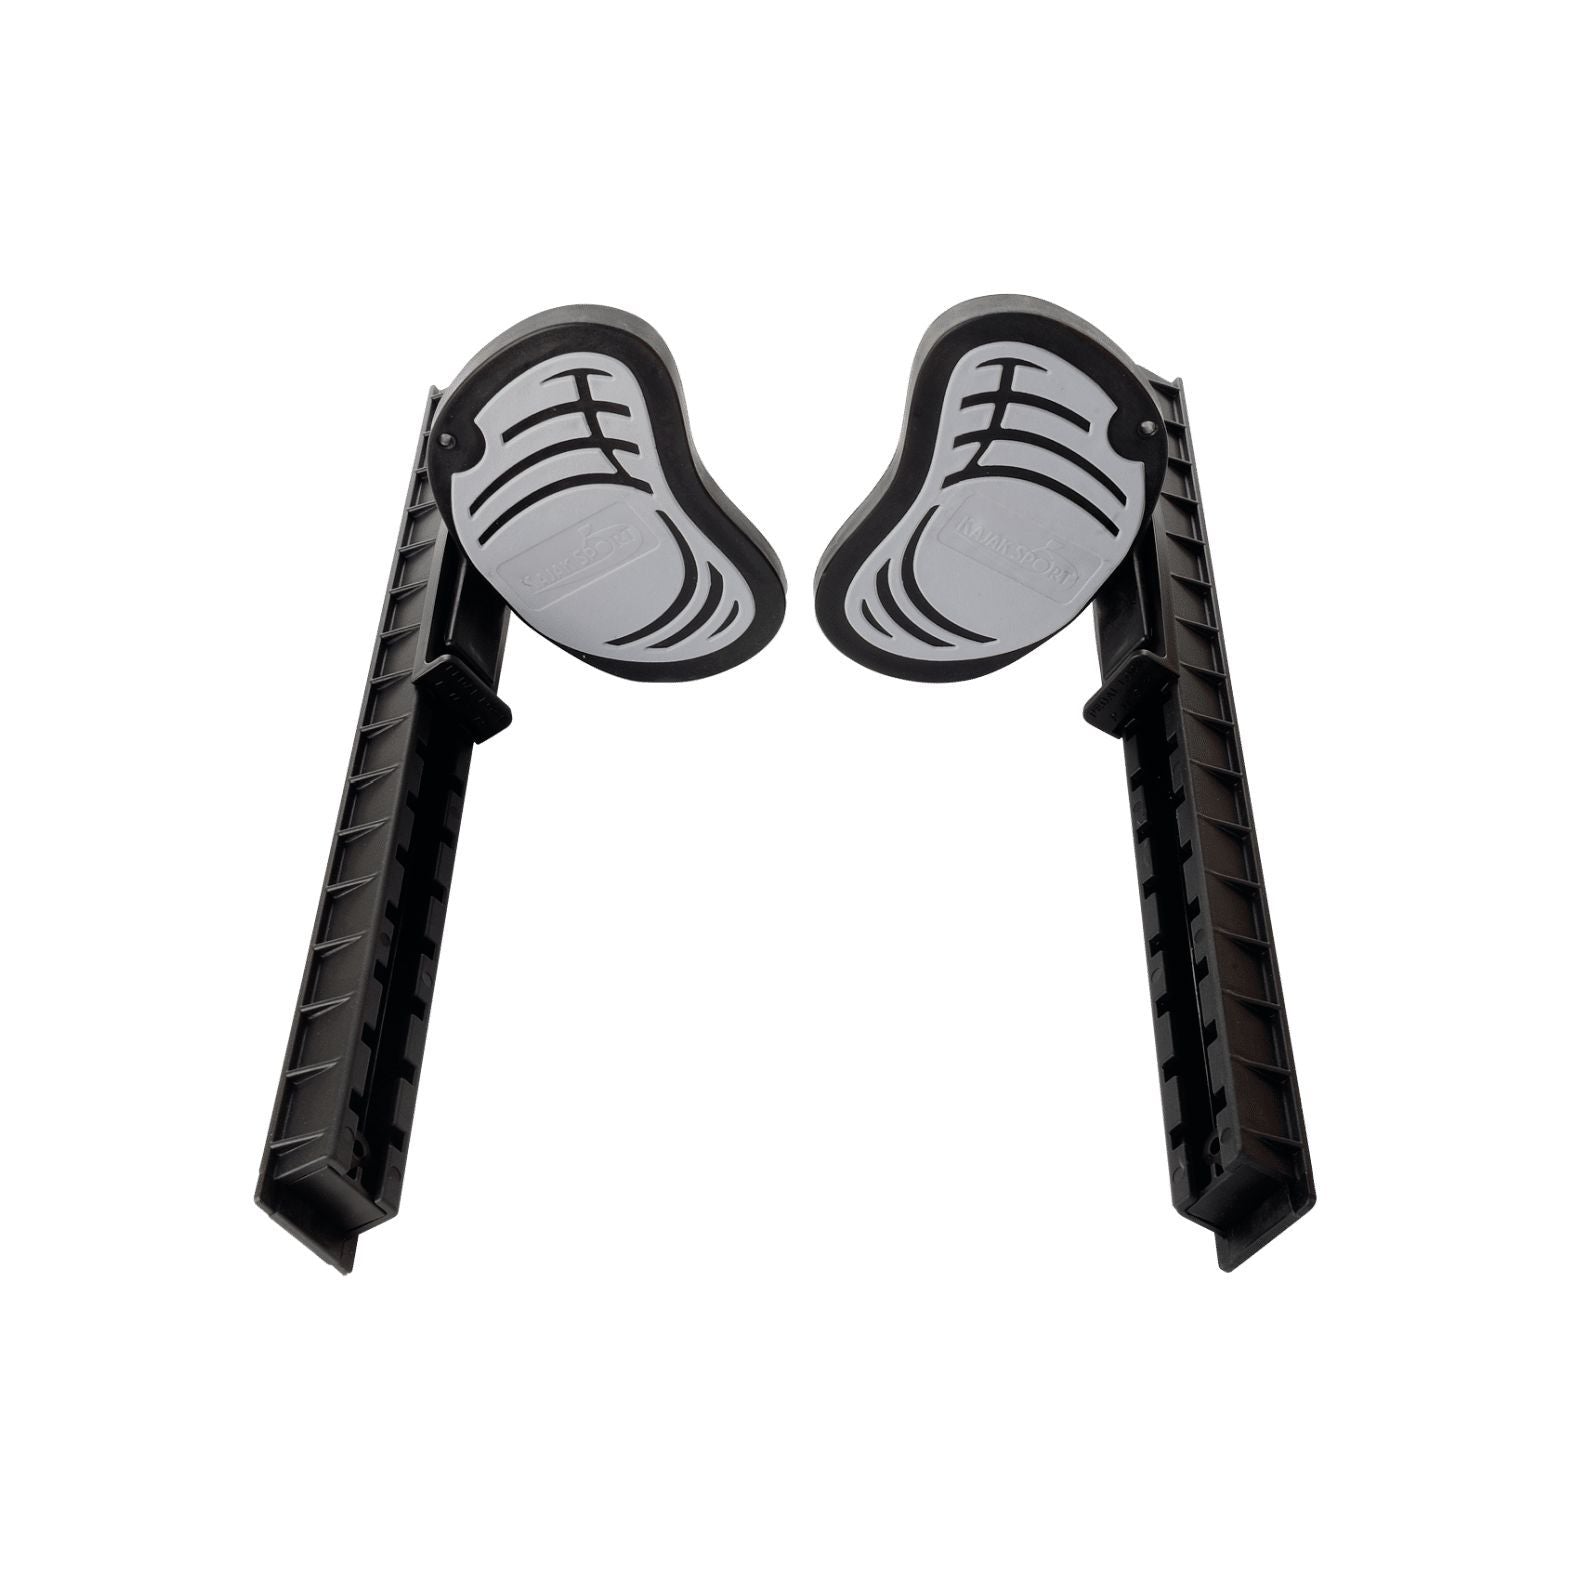 Kajaksport flex-joint steering system